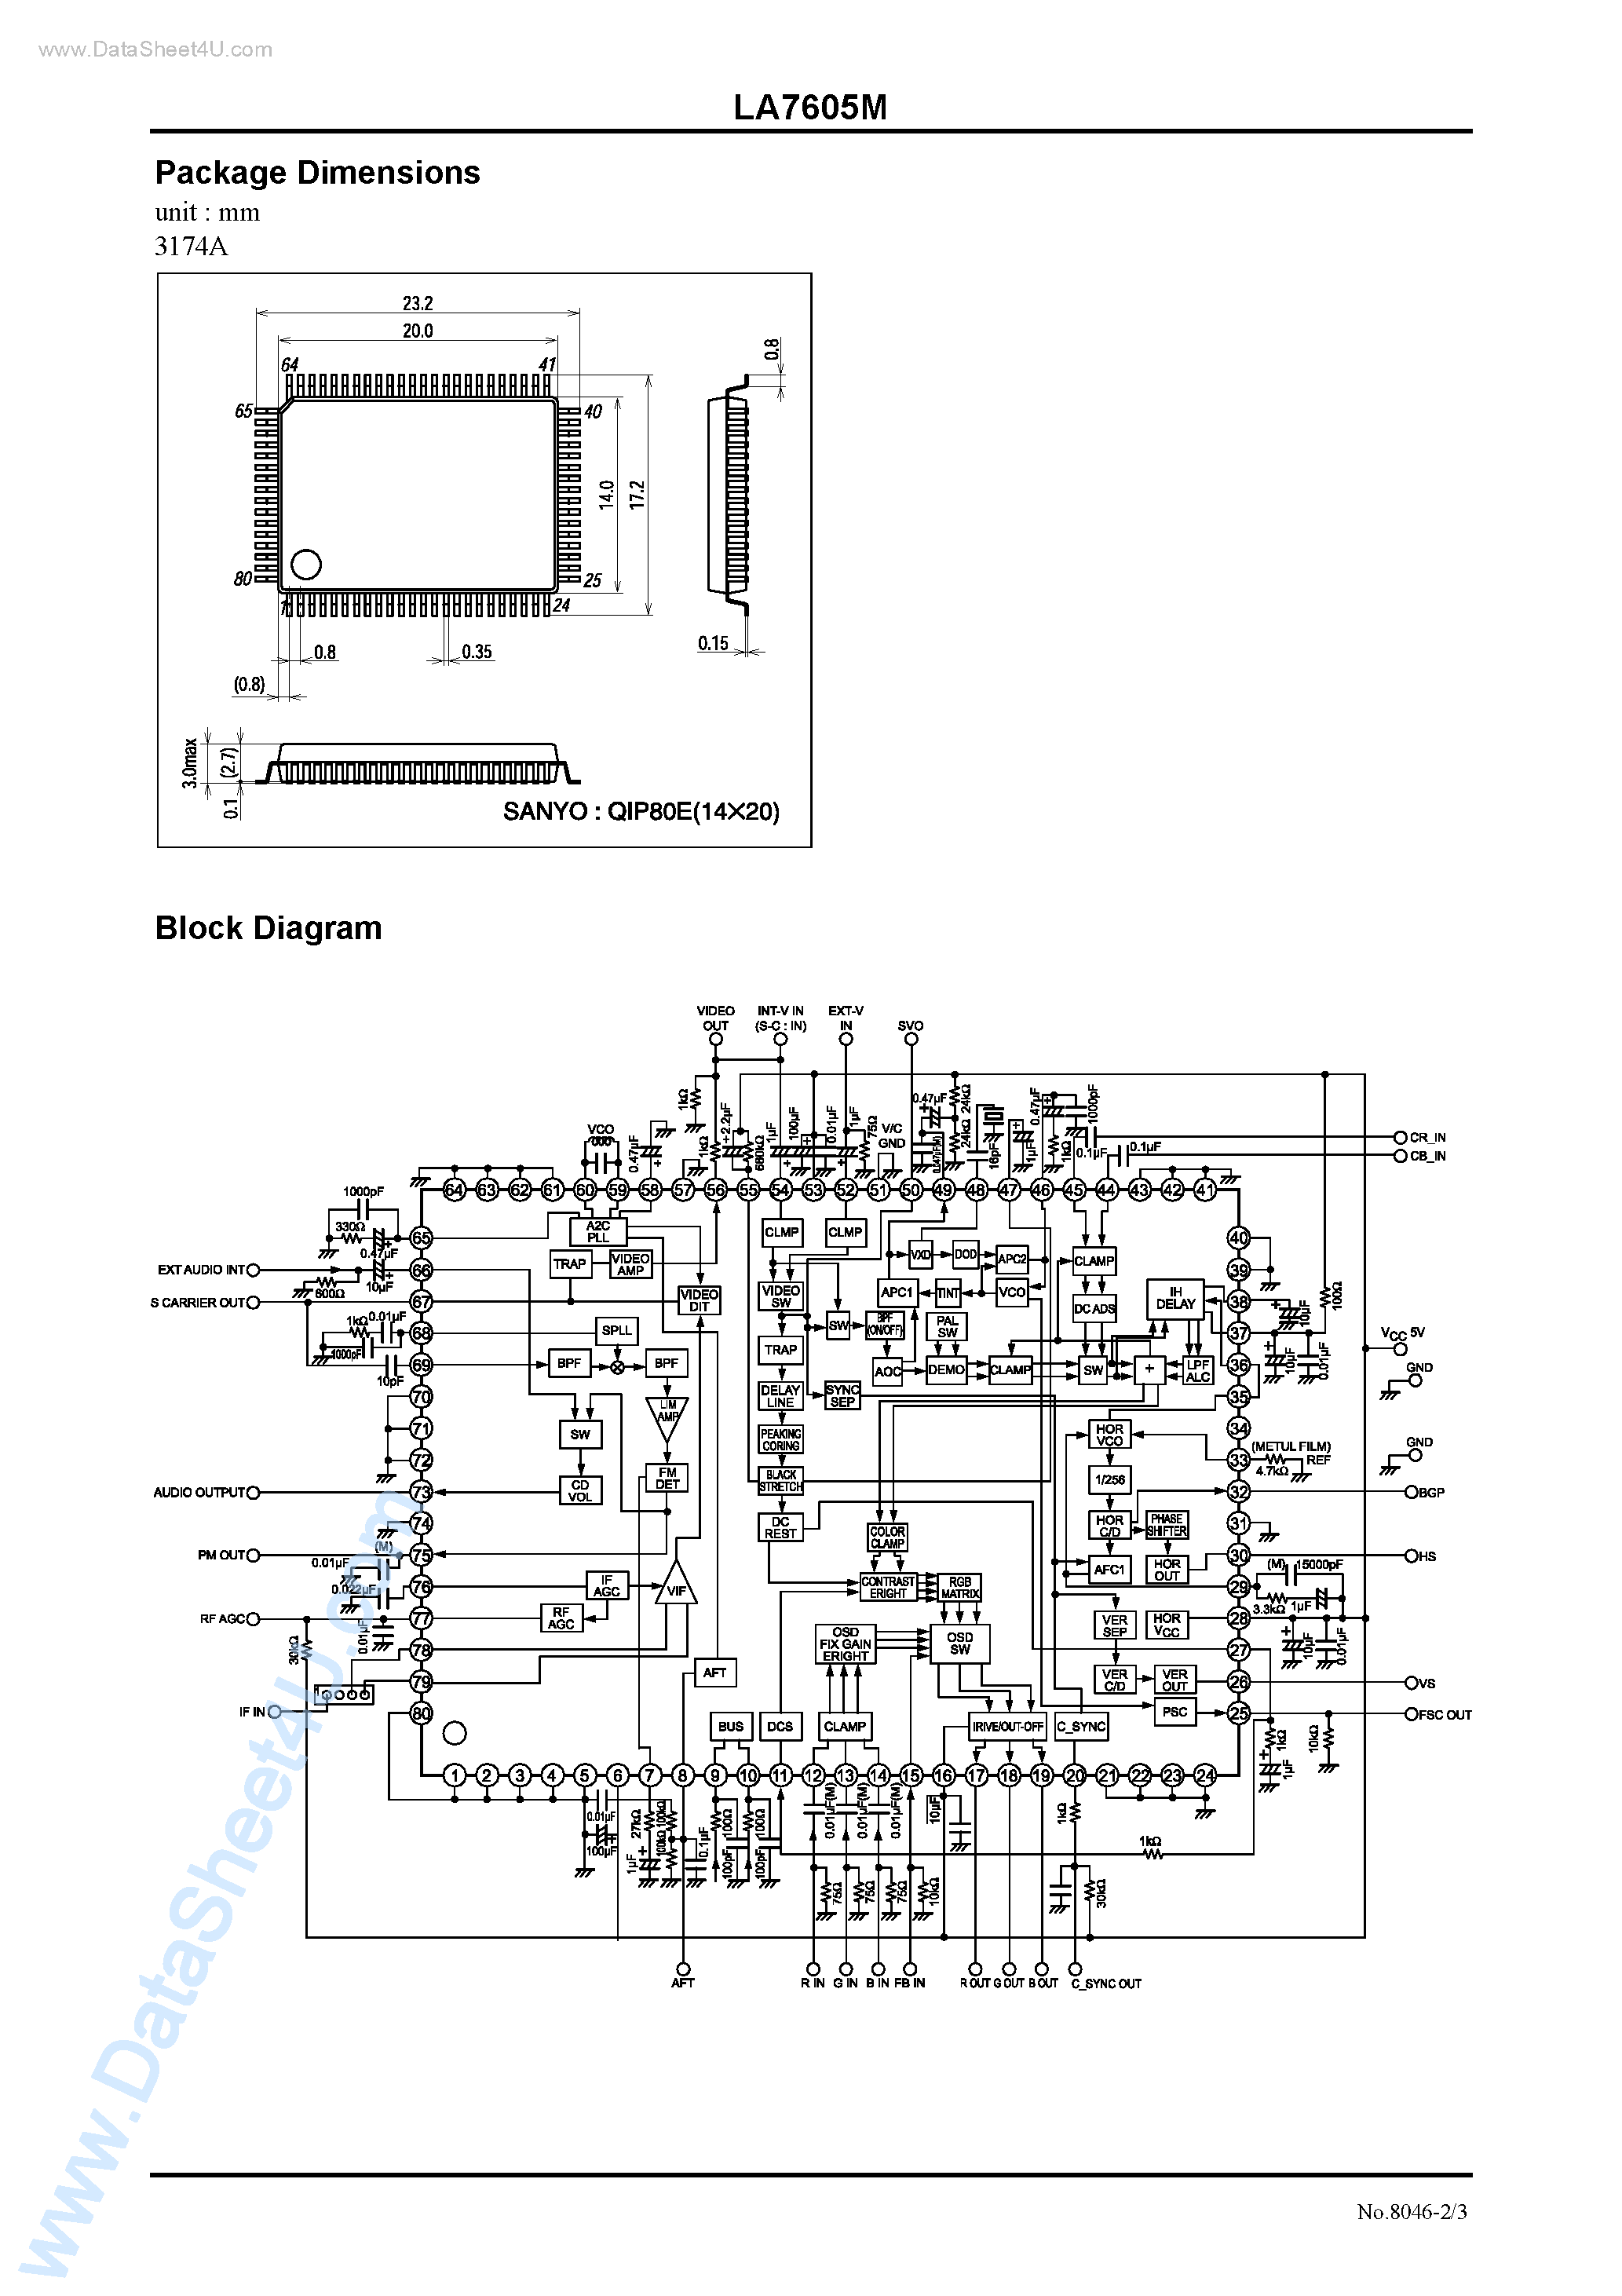 Даташит LA7605M - Video Signal Processor страница 2